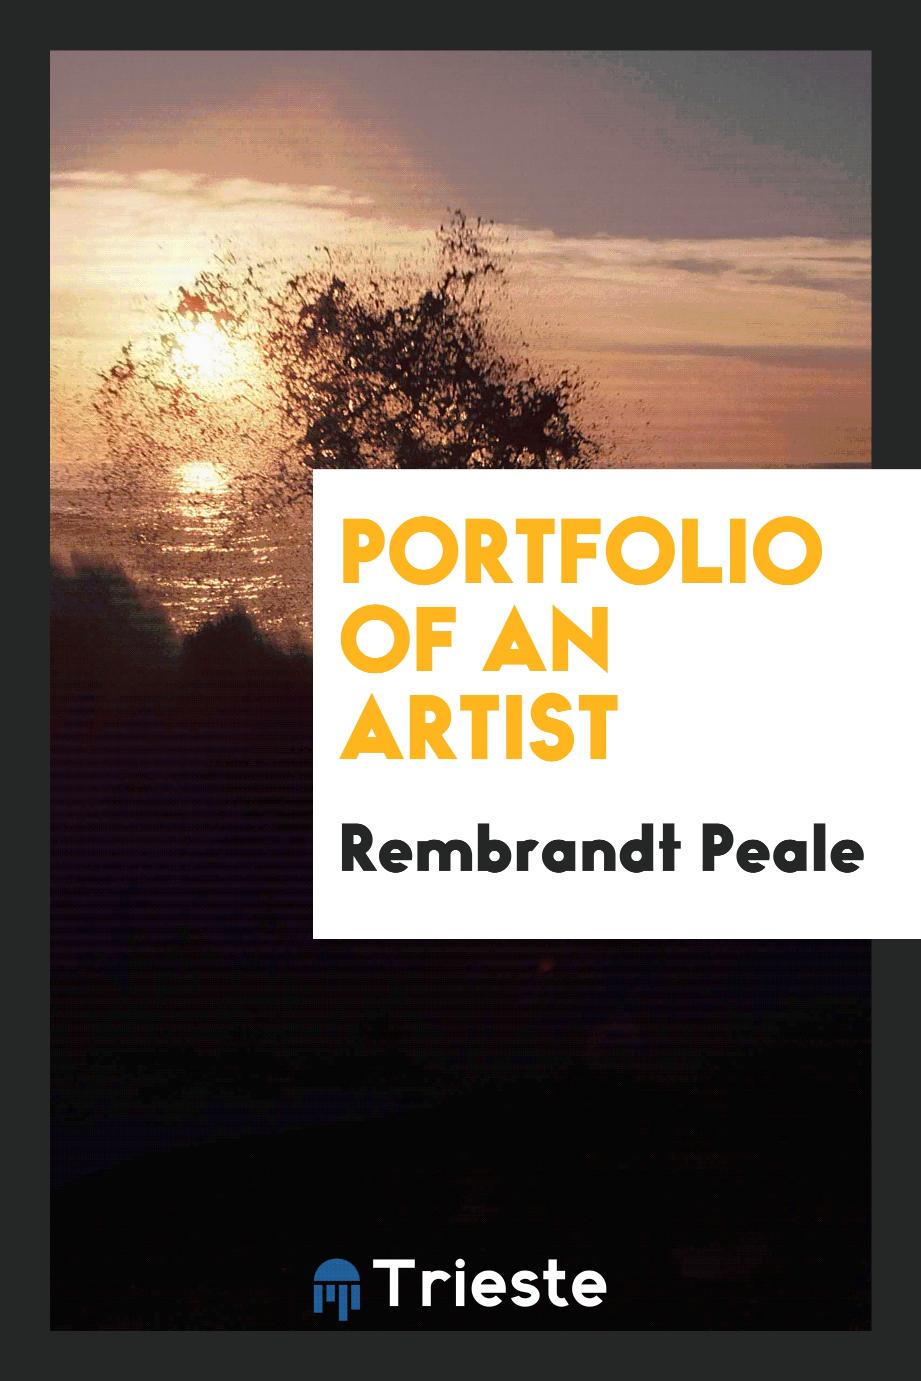 Rembrandt Peale - Portfolio of an Artist